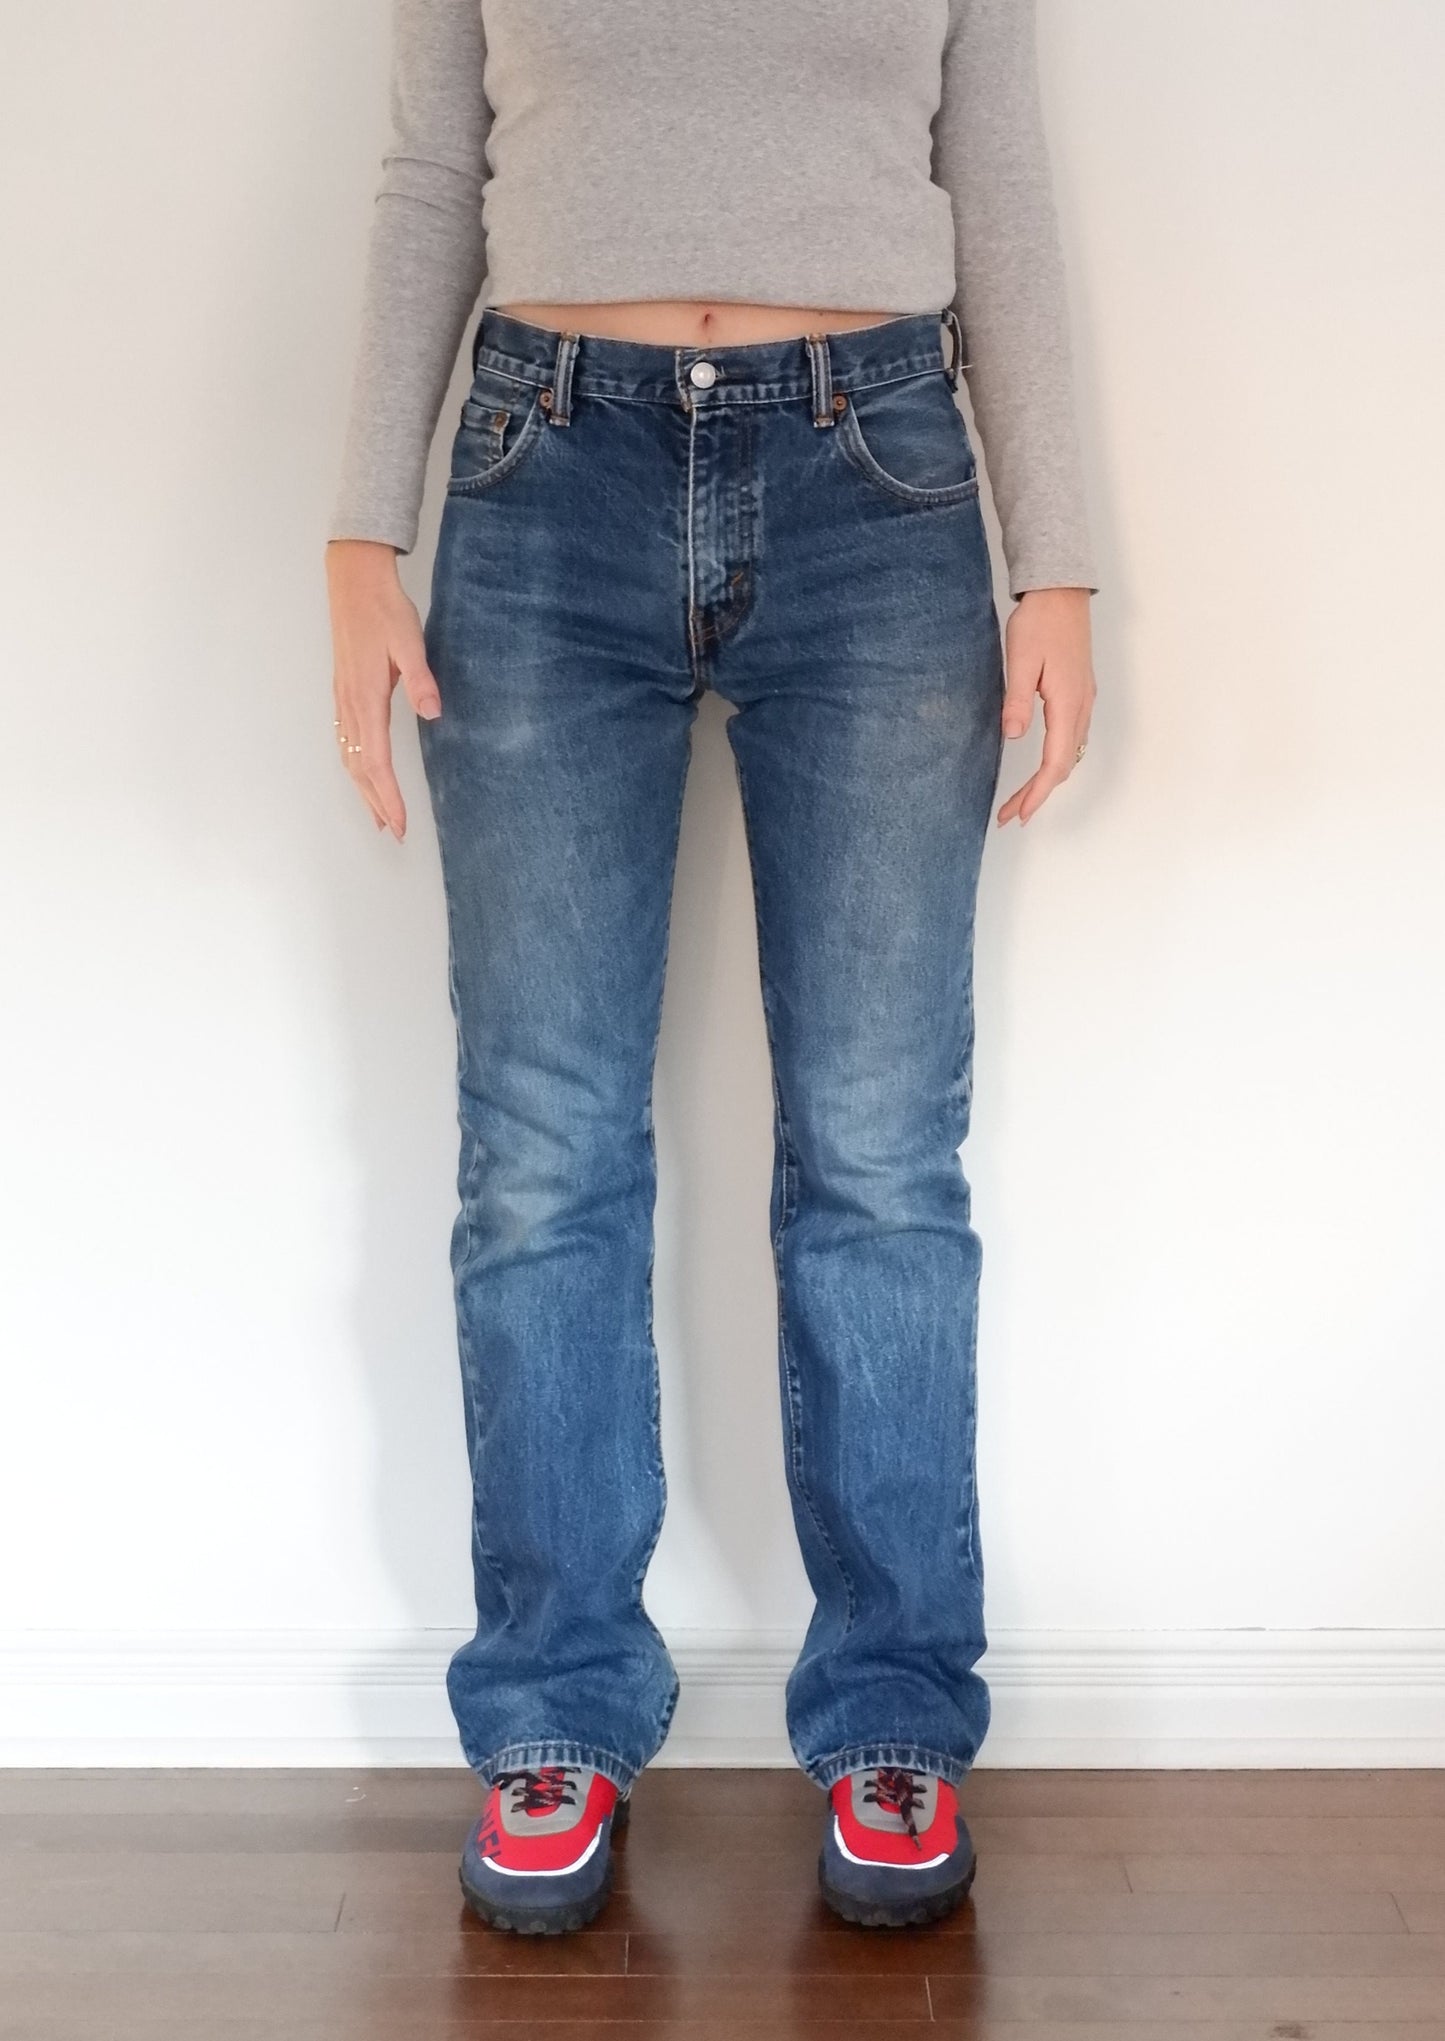 Levis 517 Dark Blue Faded Slim Fit Jeans - 30